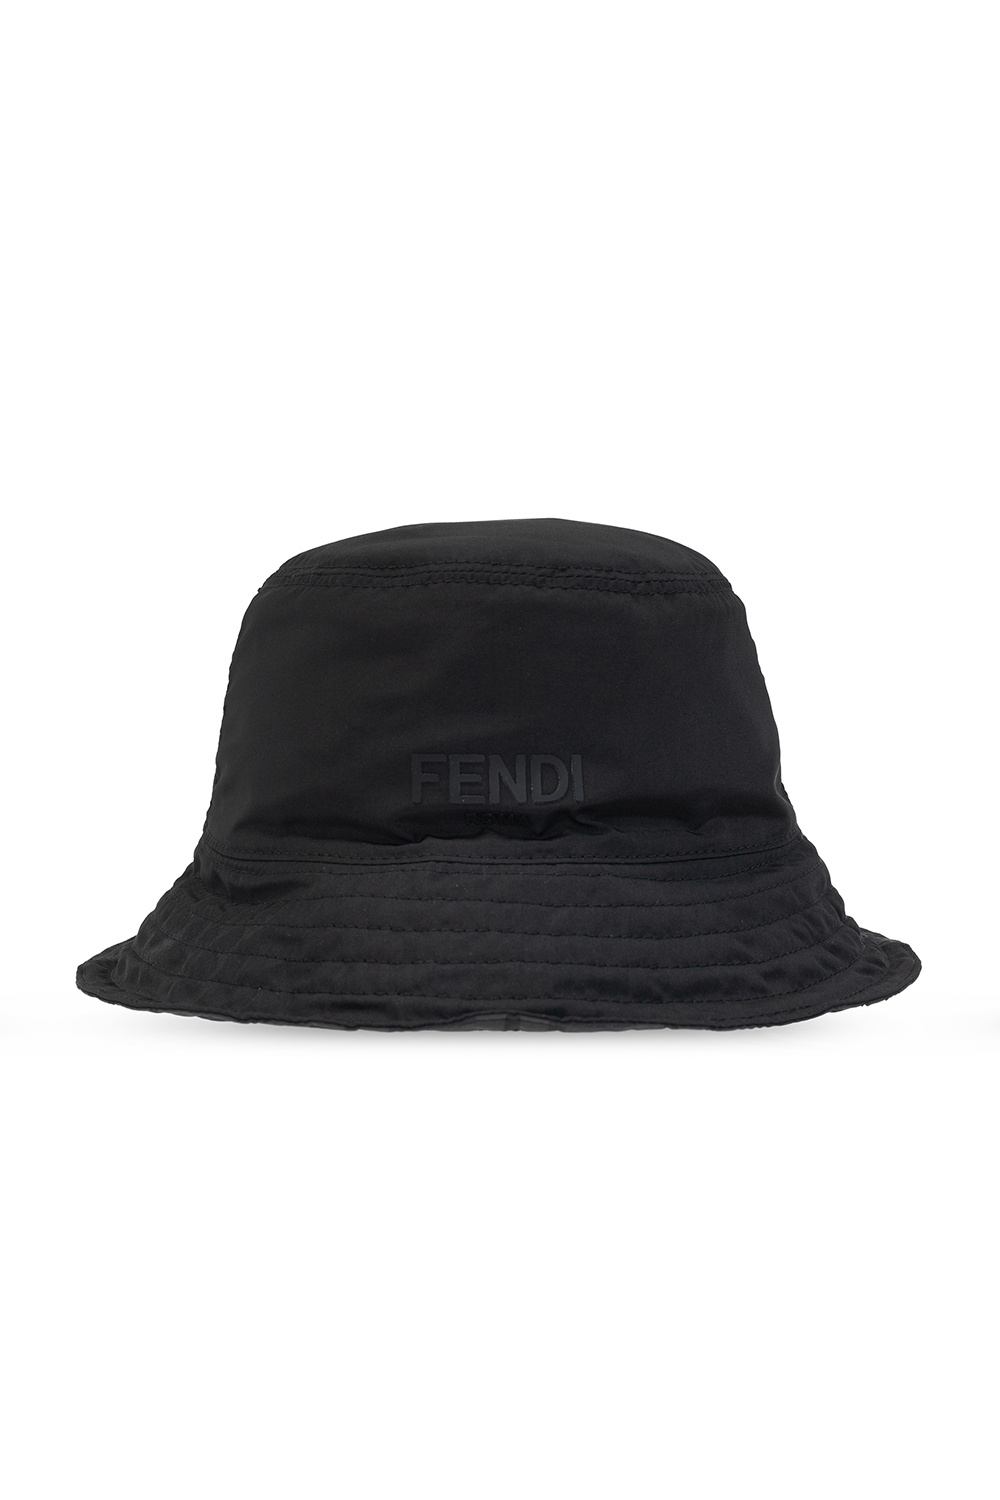 Fendi Kids hat eyewear s men brown Towels